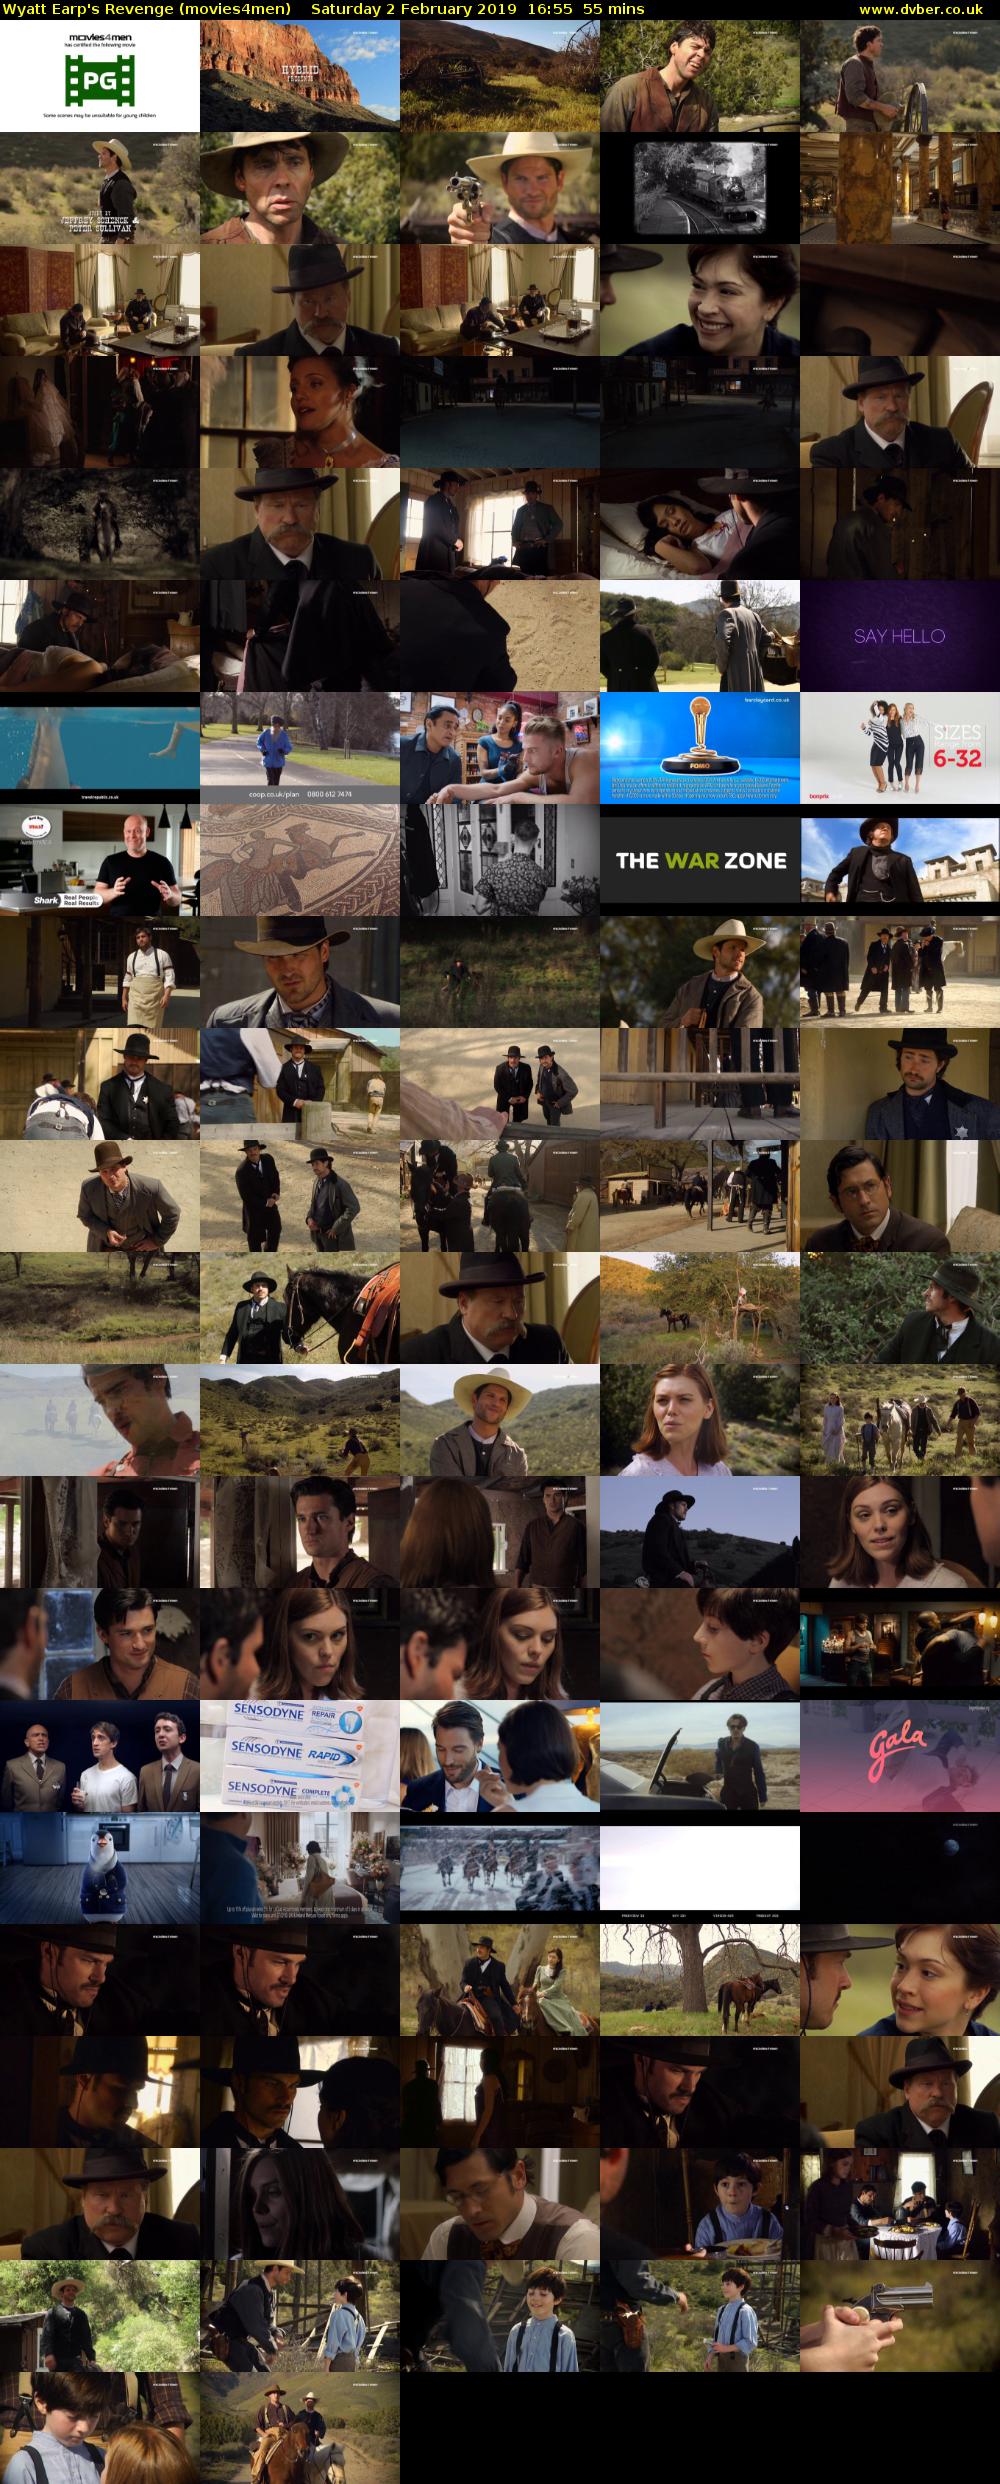 Wyatt Earp's Revenge (movies4men) Saturday 2 February 2019 16:55 - 17:50